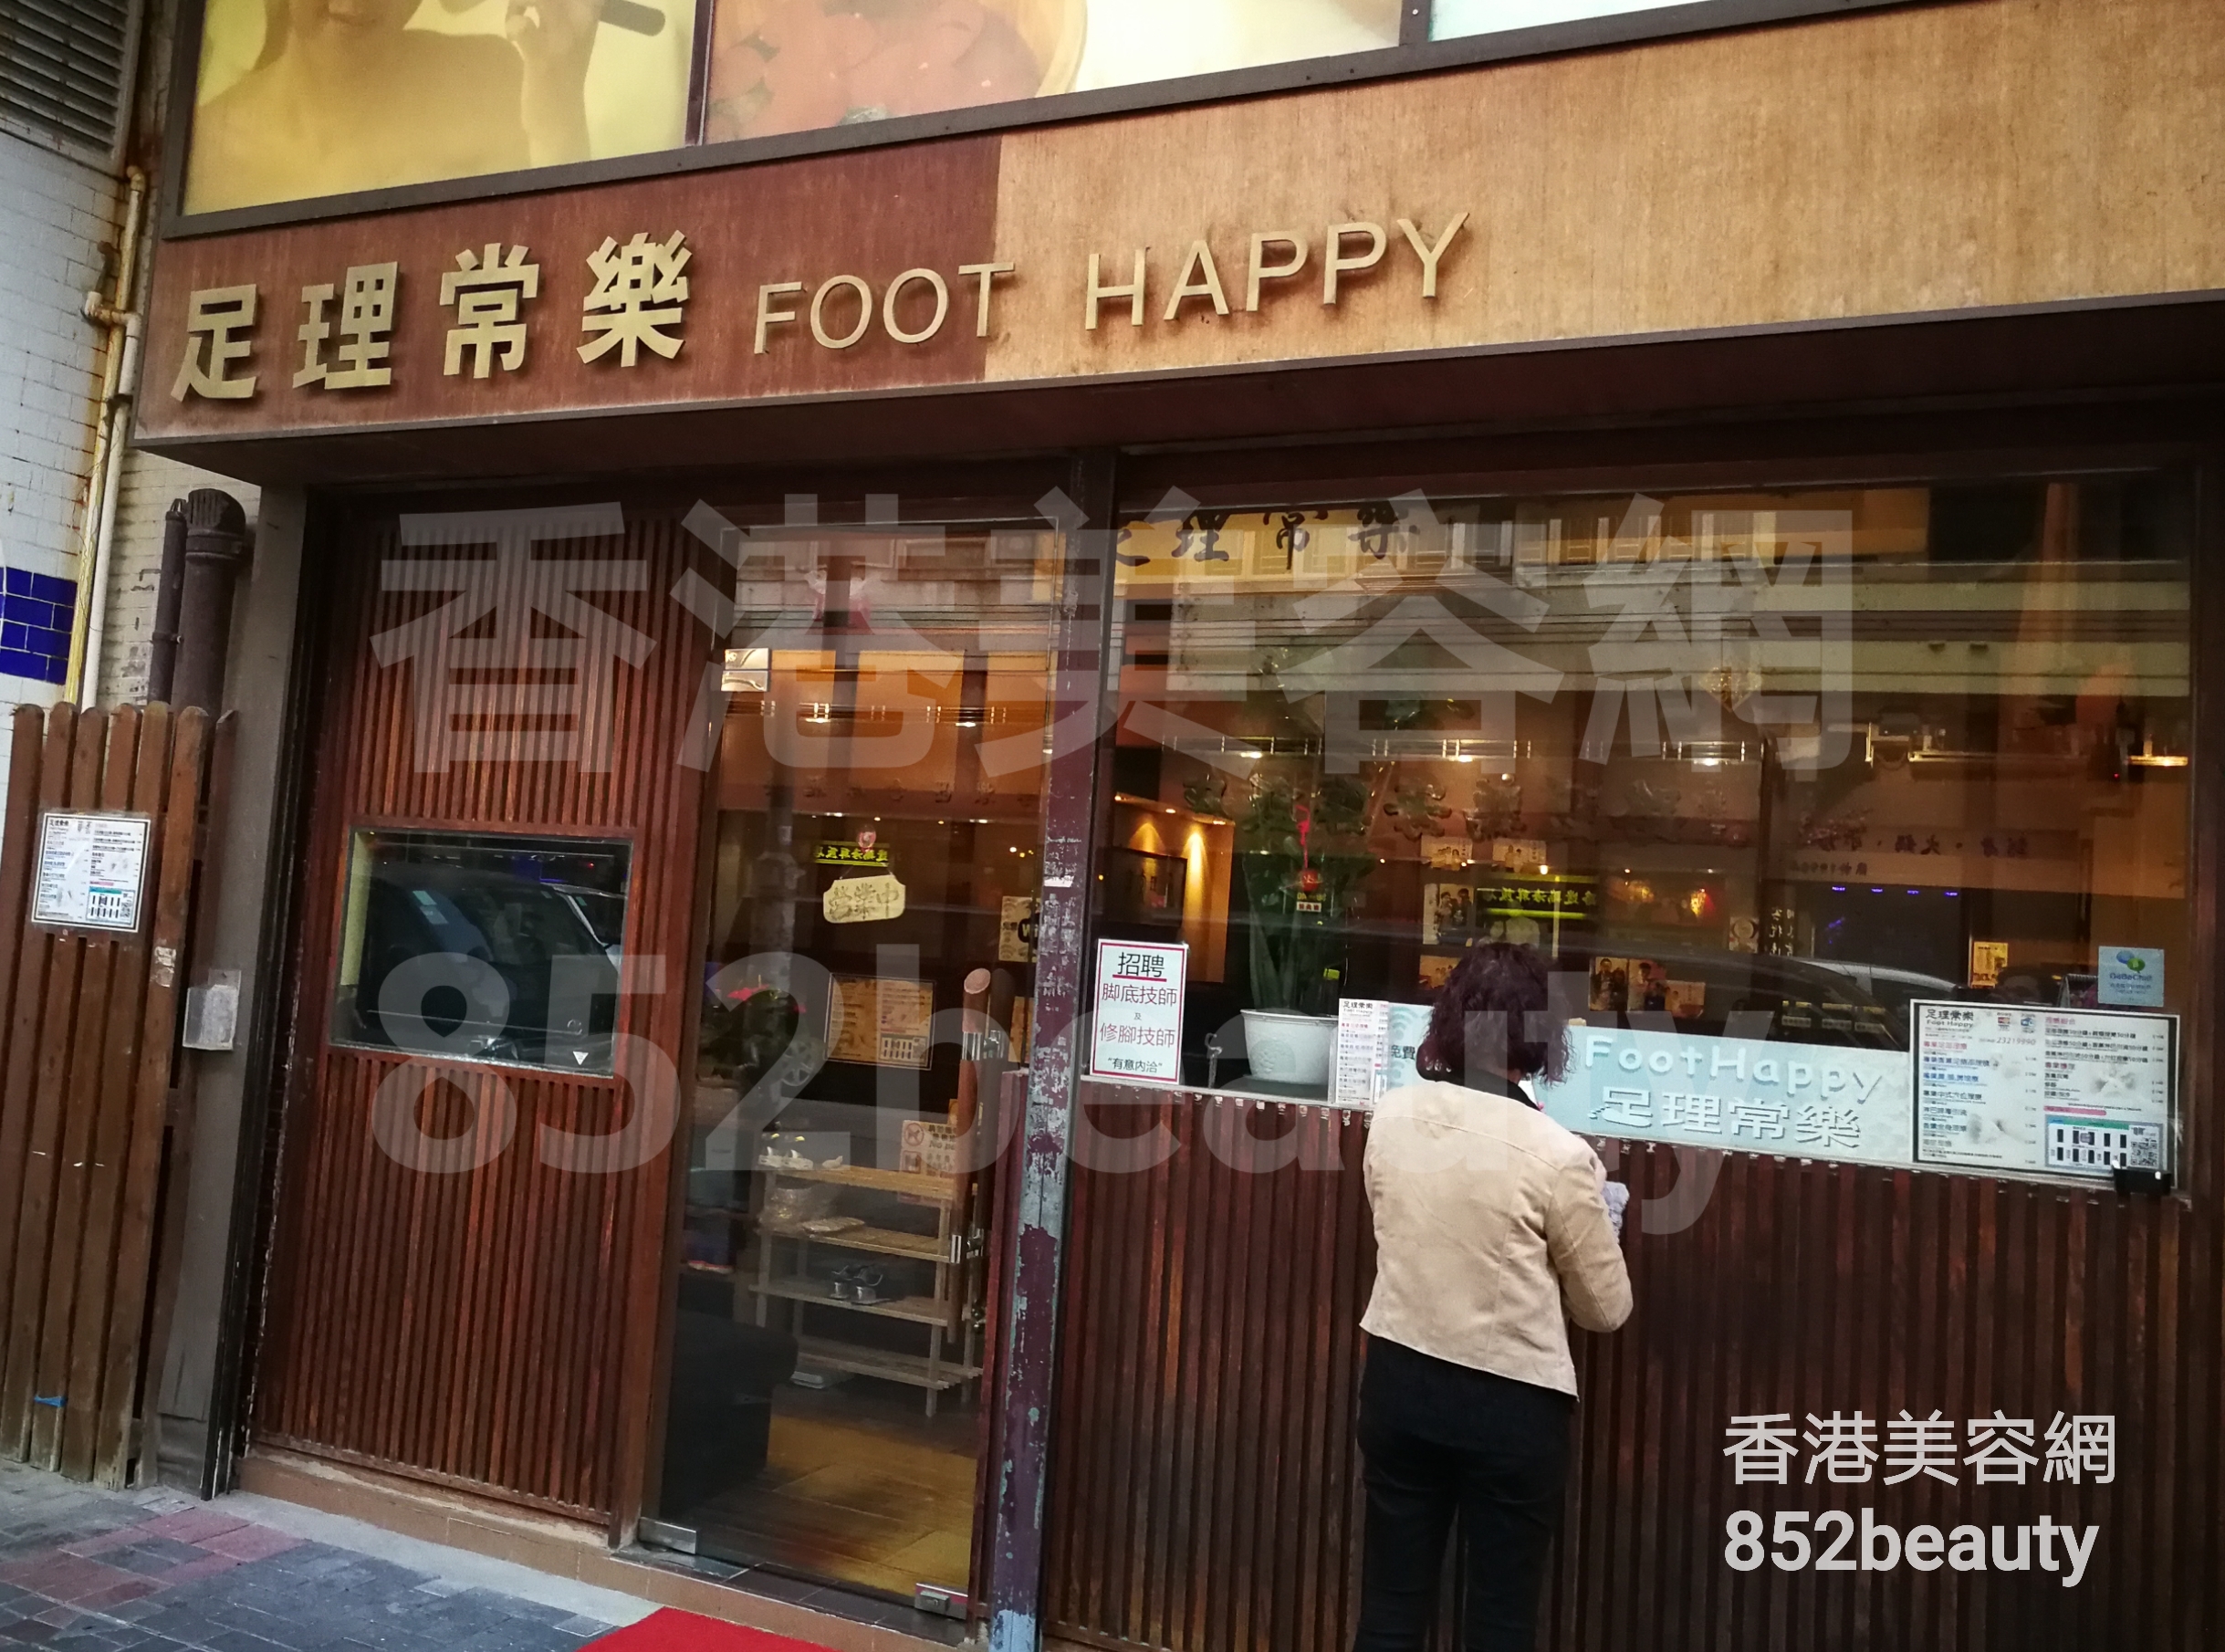 Hand and foot care: 足理常樂 (已結業)